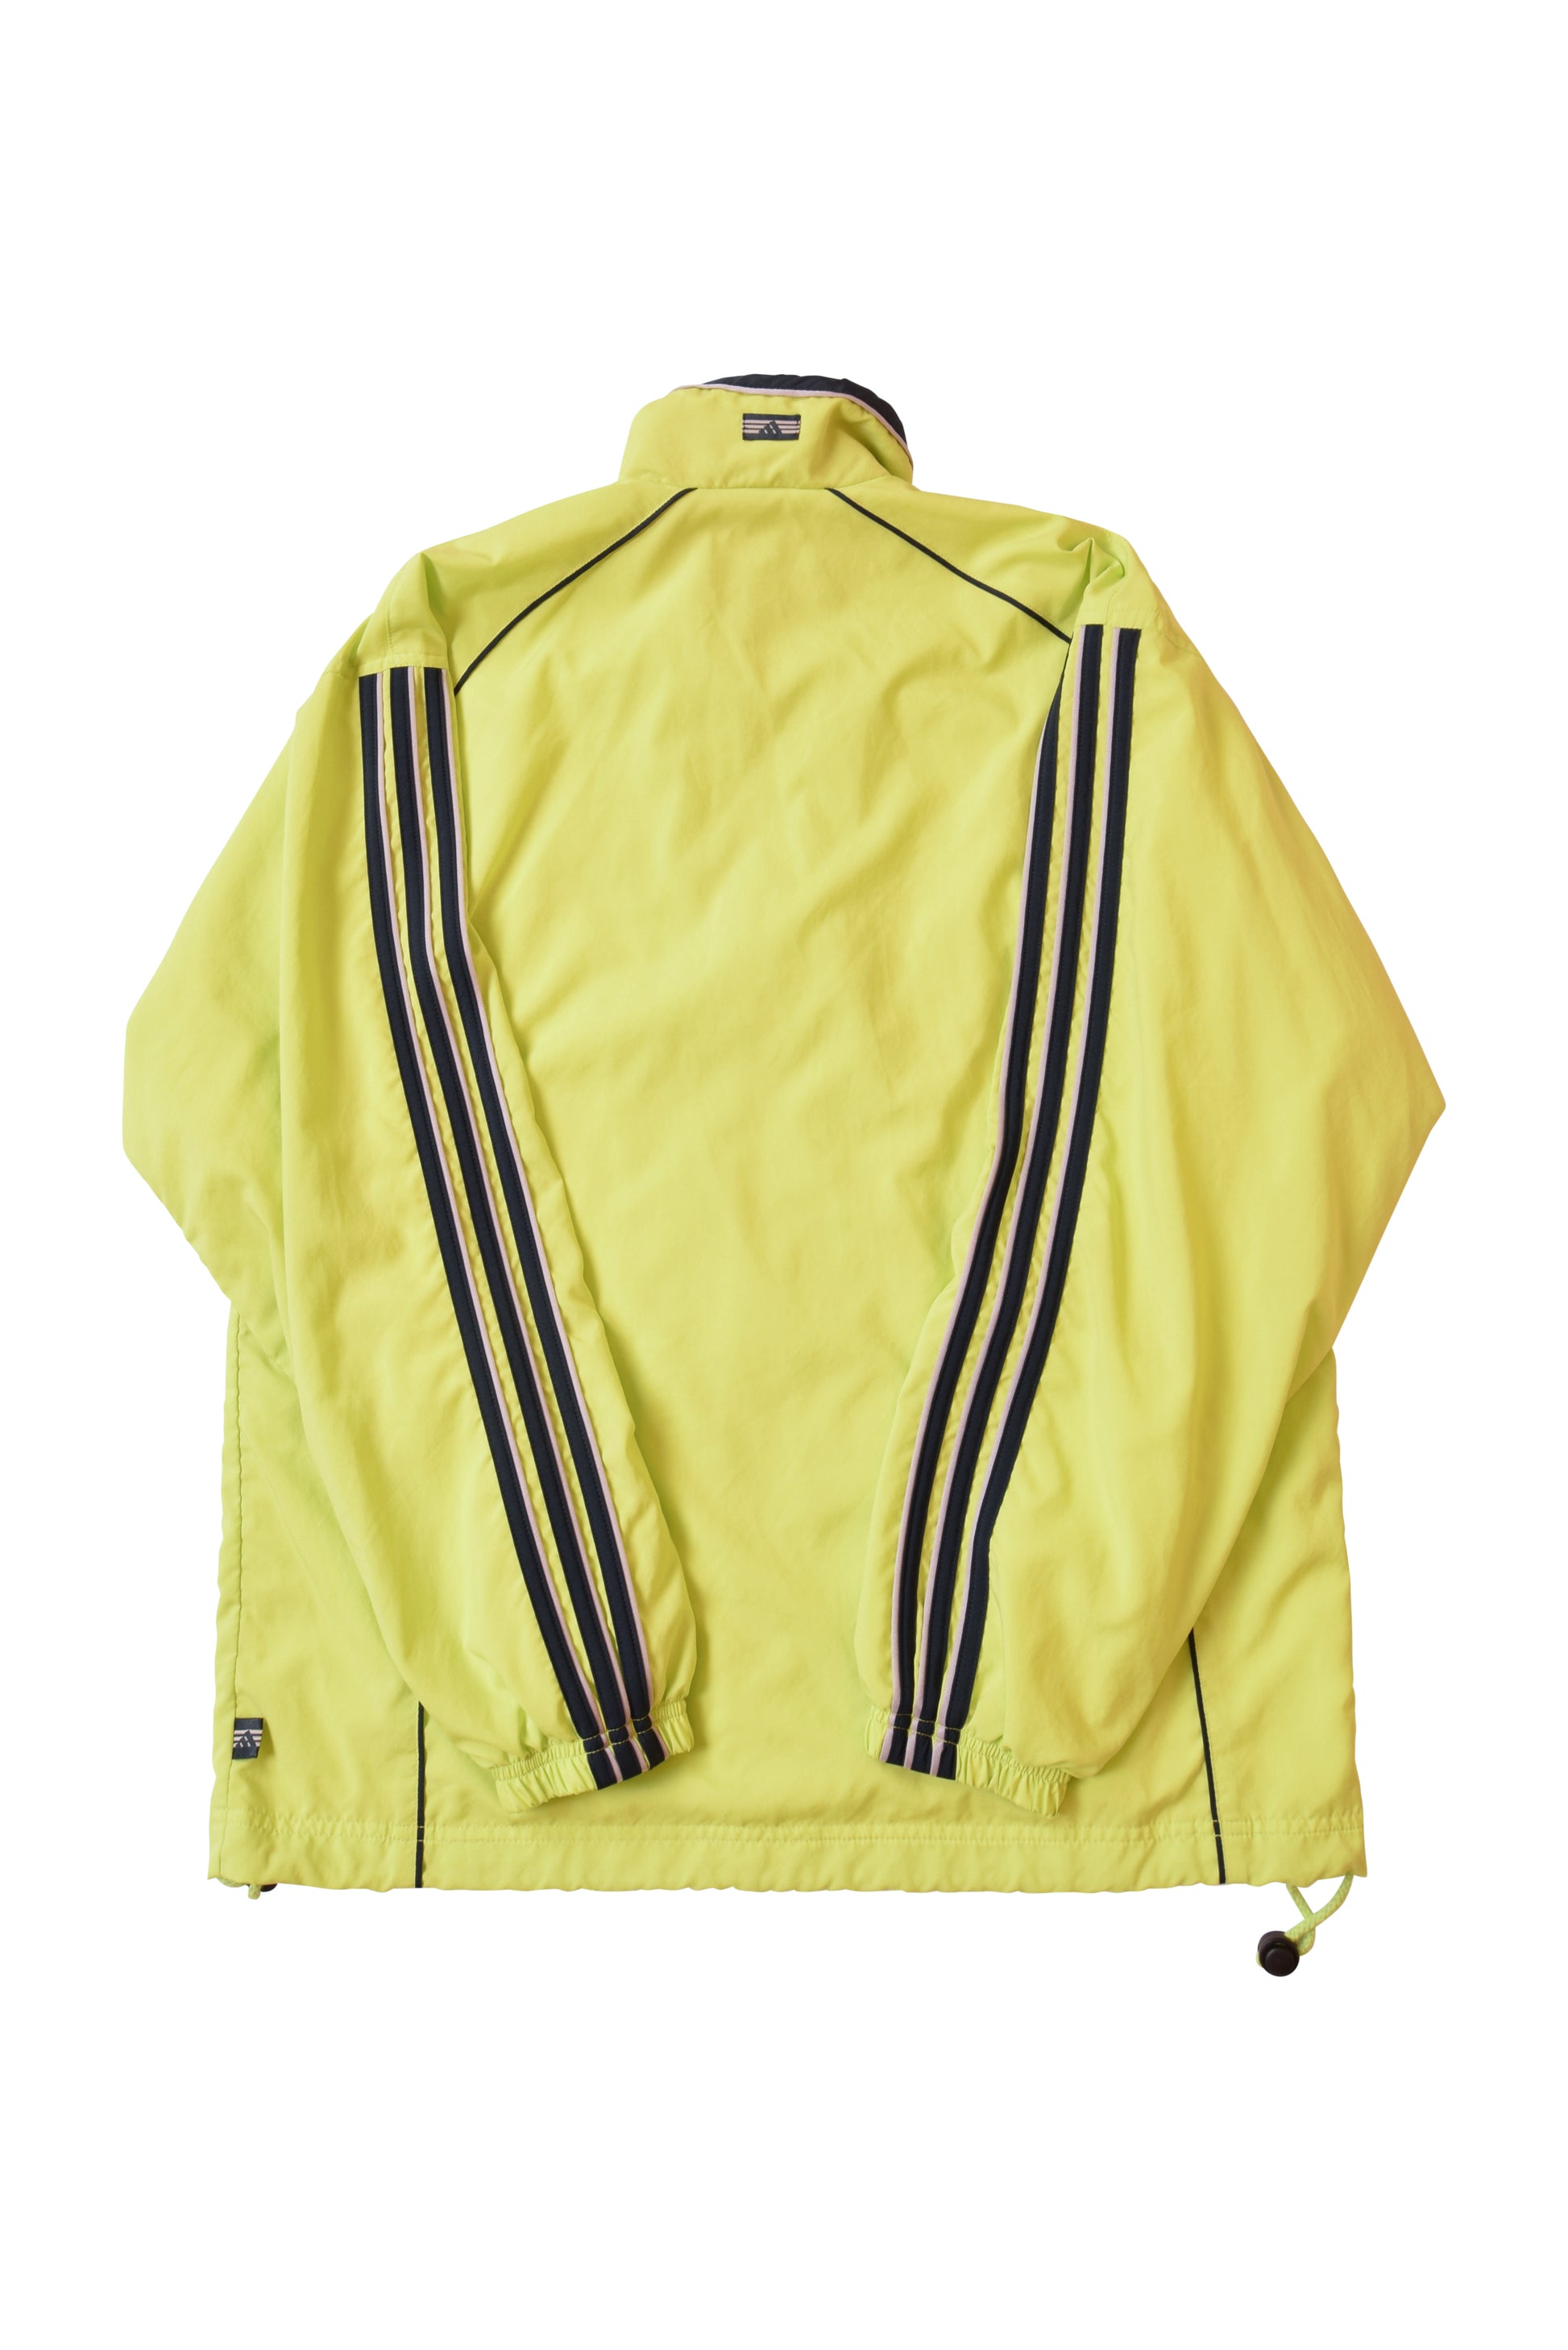 Vintage Adidas Jacket 90's Neon Green Size M